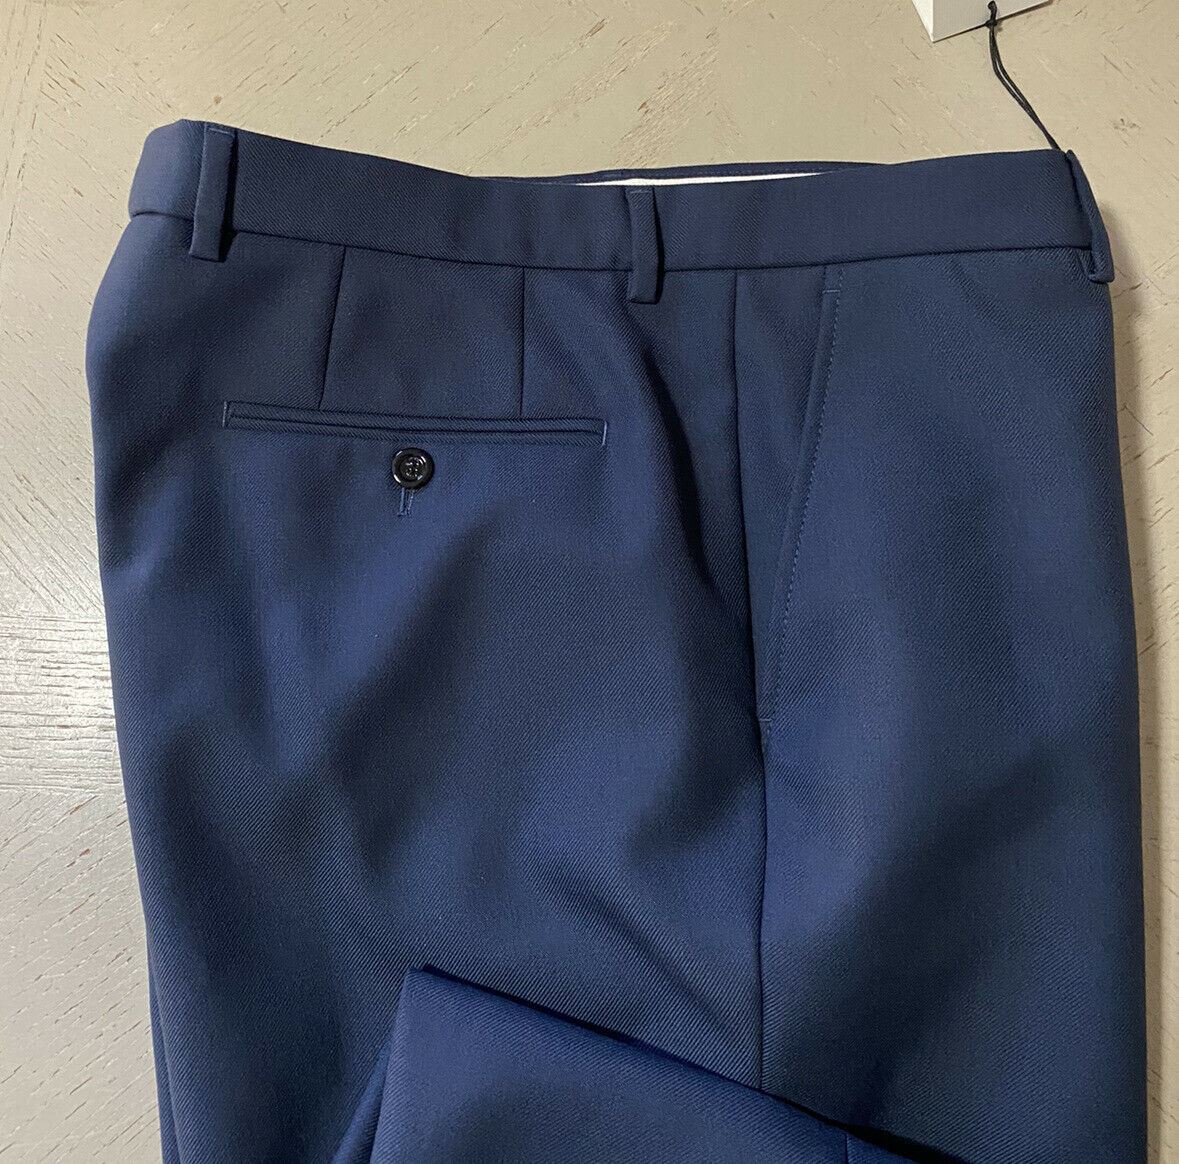 NWT $1400 Gucci Military Drill Men’s Pants Midnight Blue 36 US ( 52 Eu ) Italy